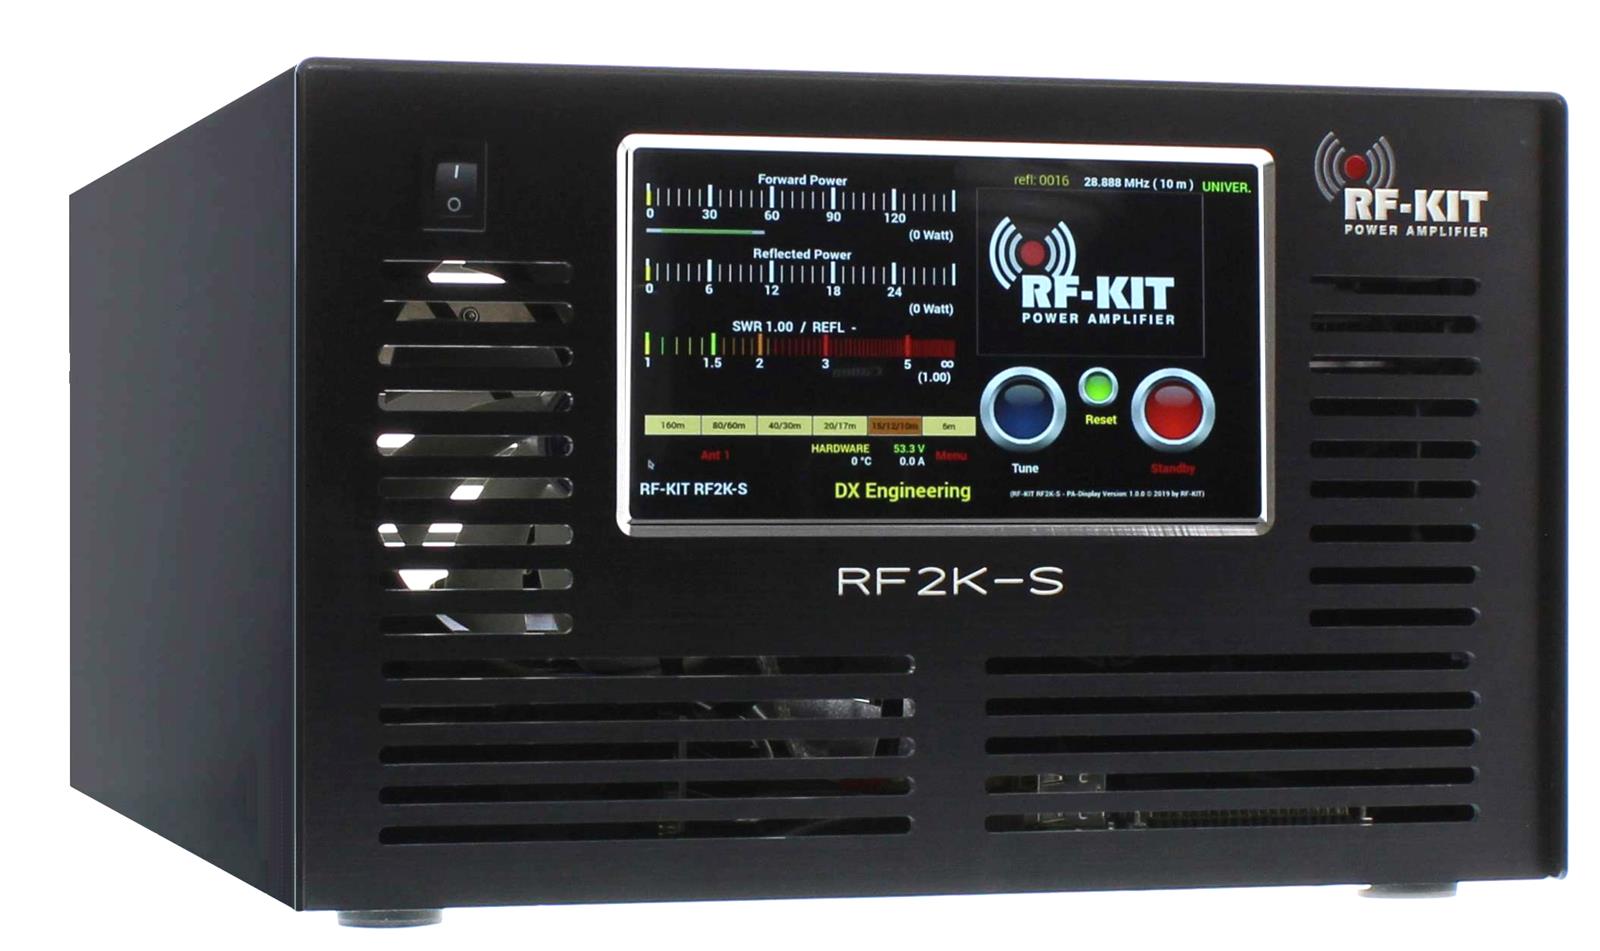 RF-Kit RF2K-S RF-KIT Power Amplifiers